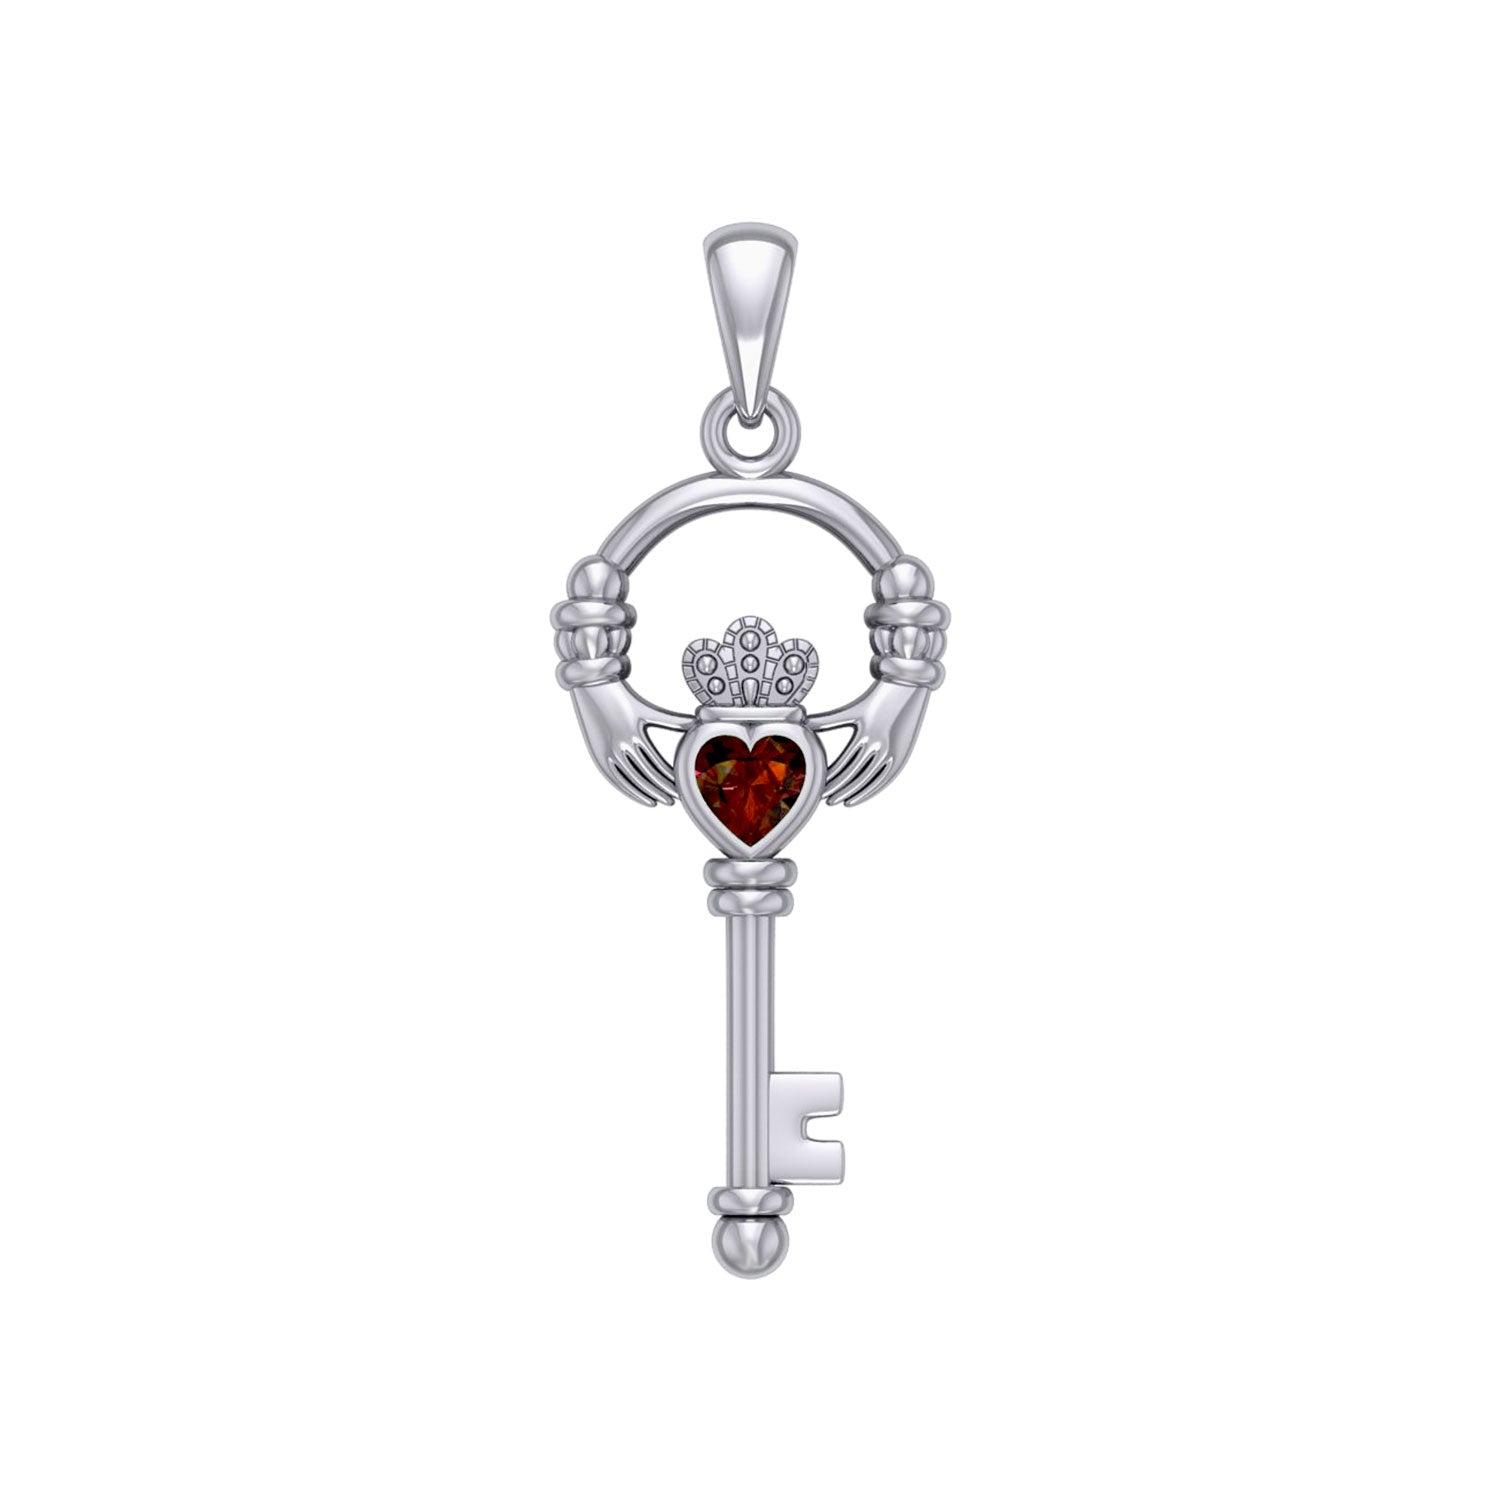 Irish Claddagh Mini Spiritual Key Silver Pendant TPD5878